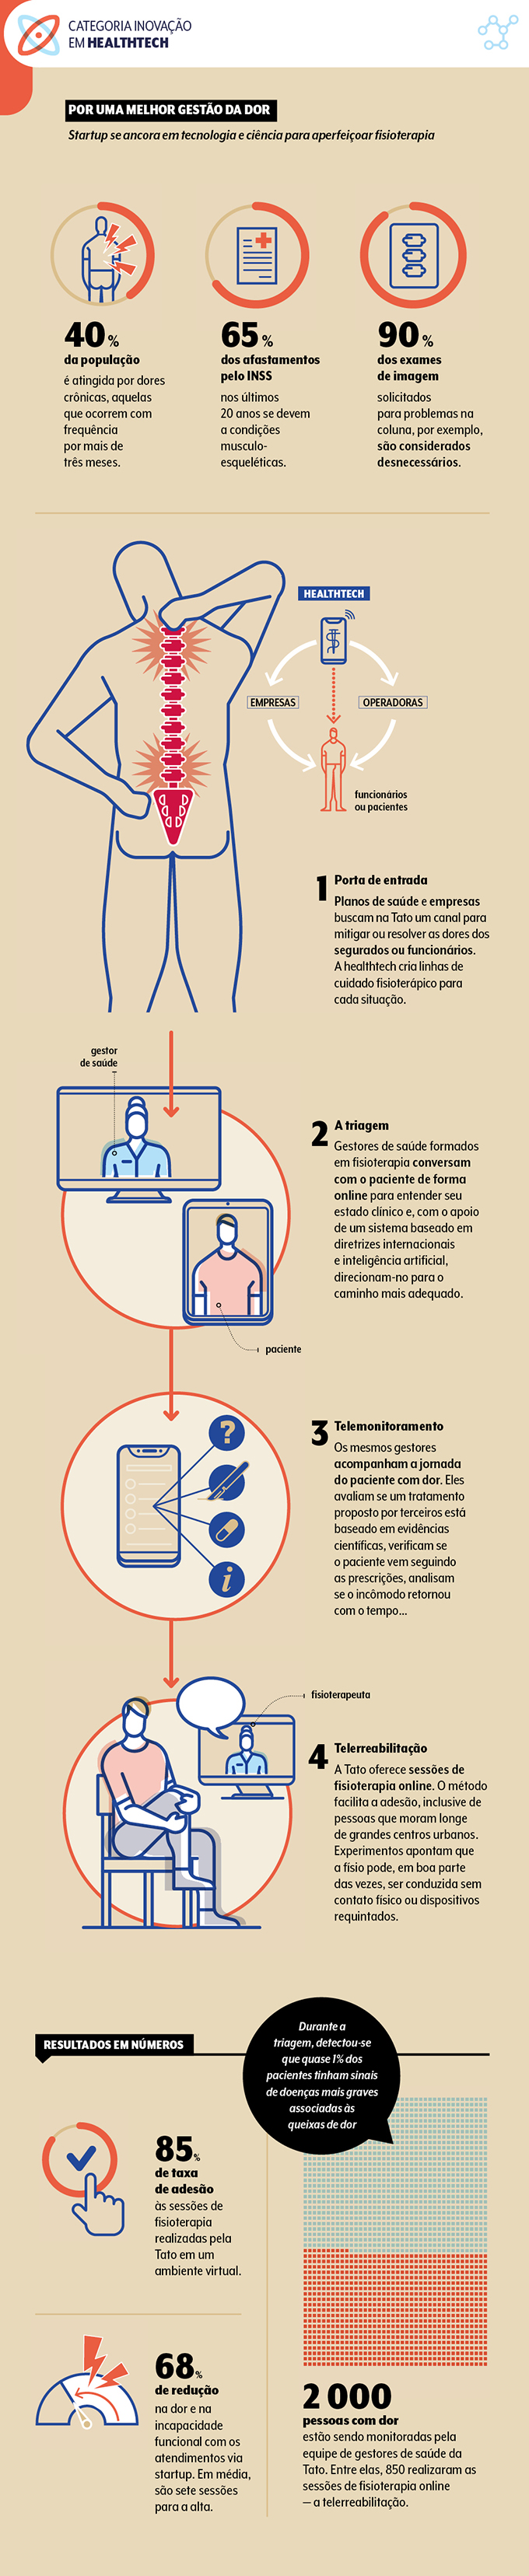 infográfico de healthtech